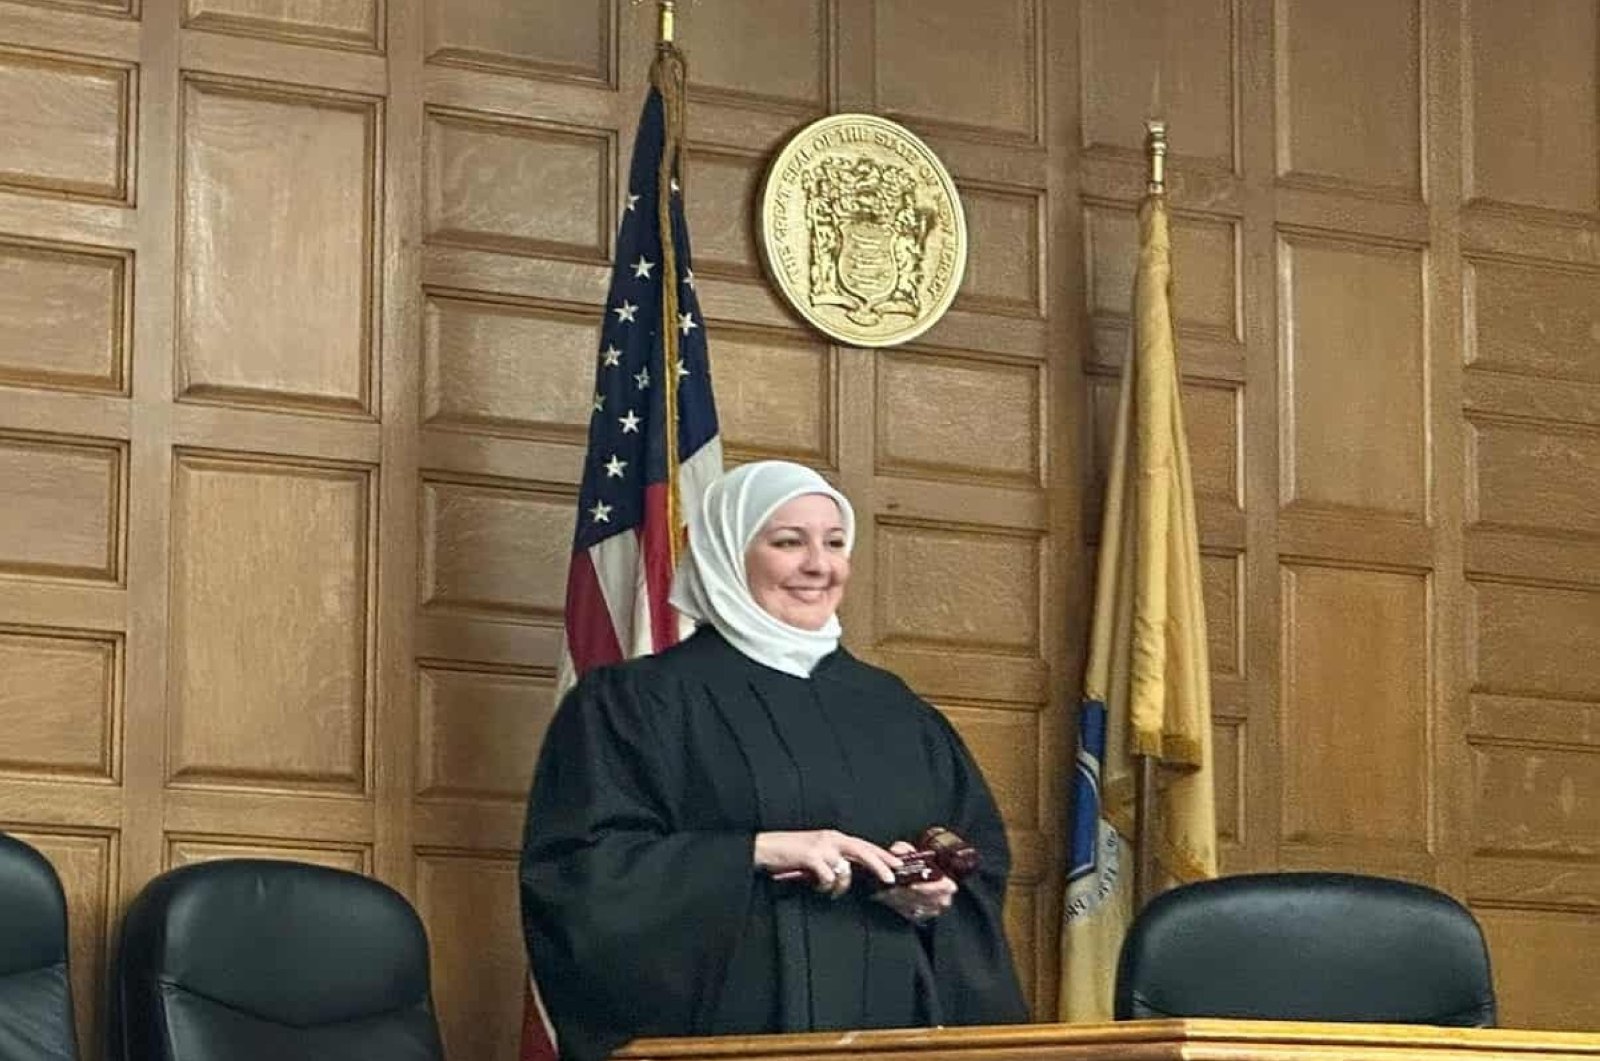 Wanita Muslim menjadi hakim berjilbab pertama di AS